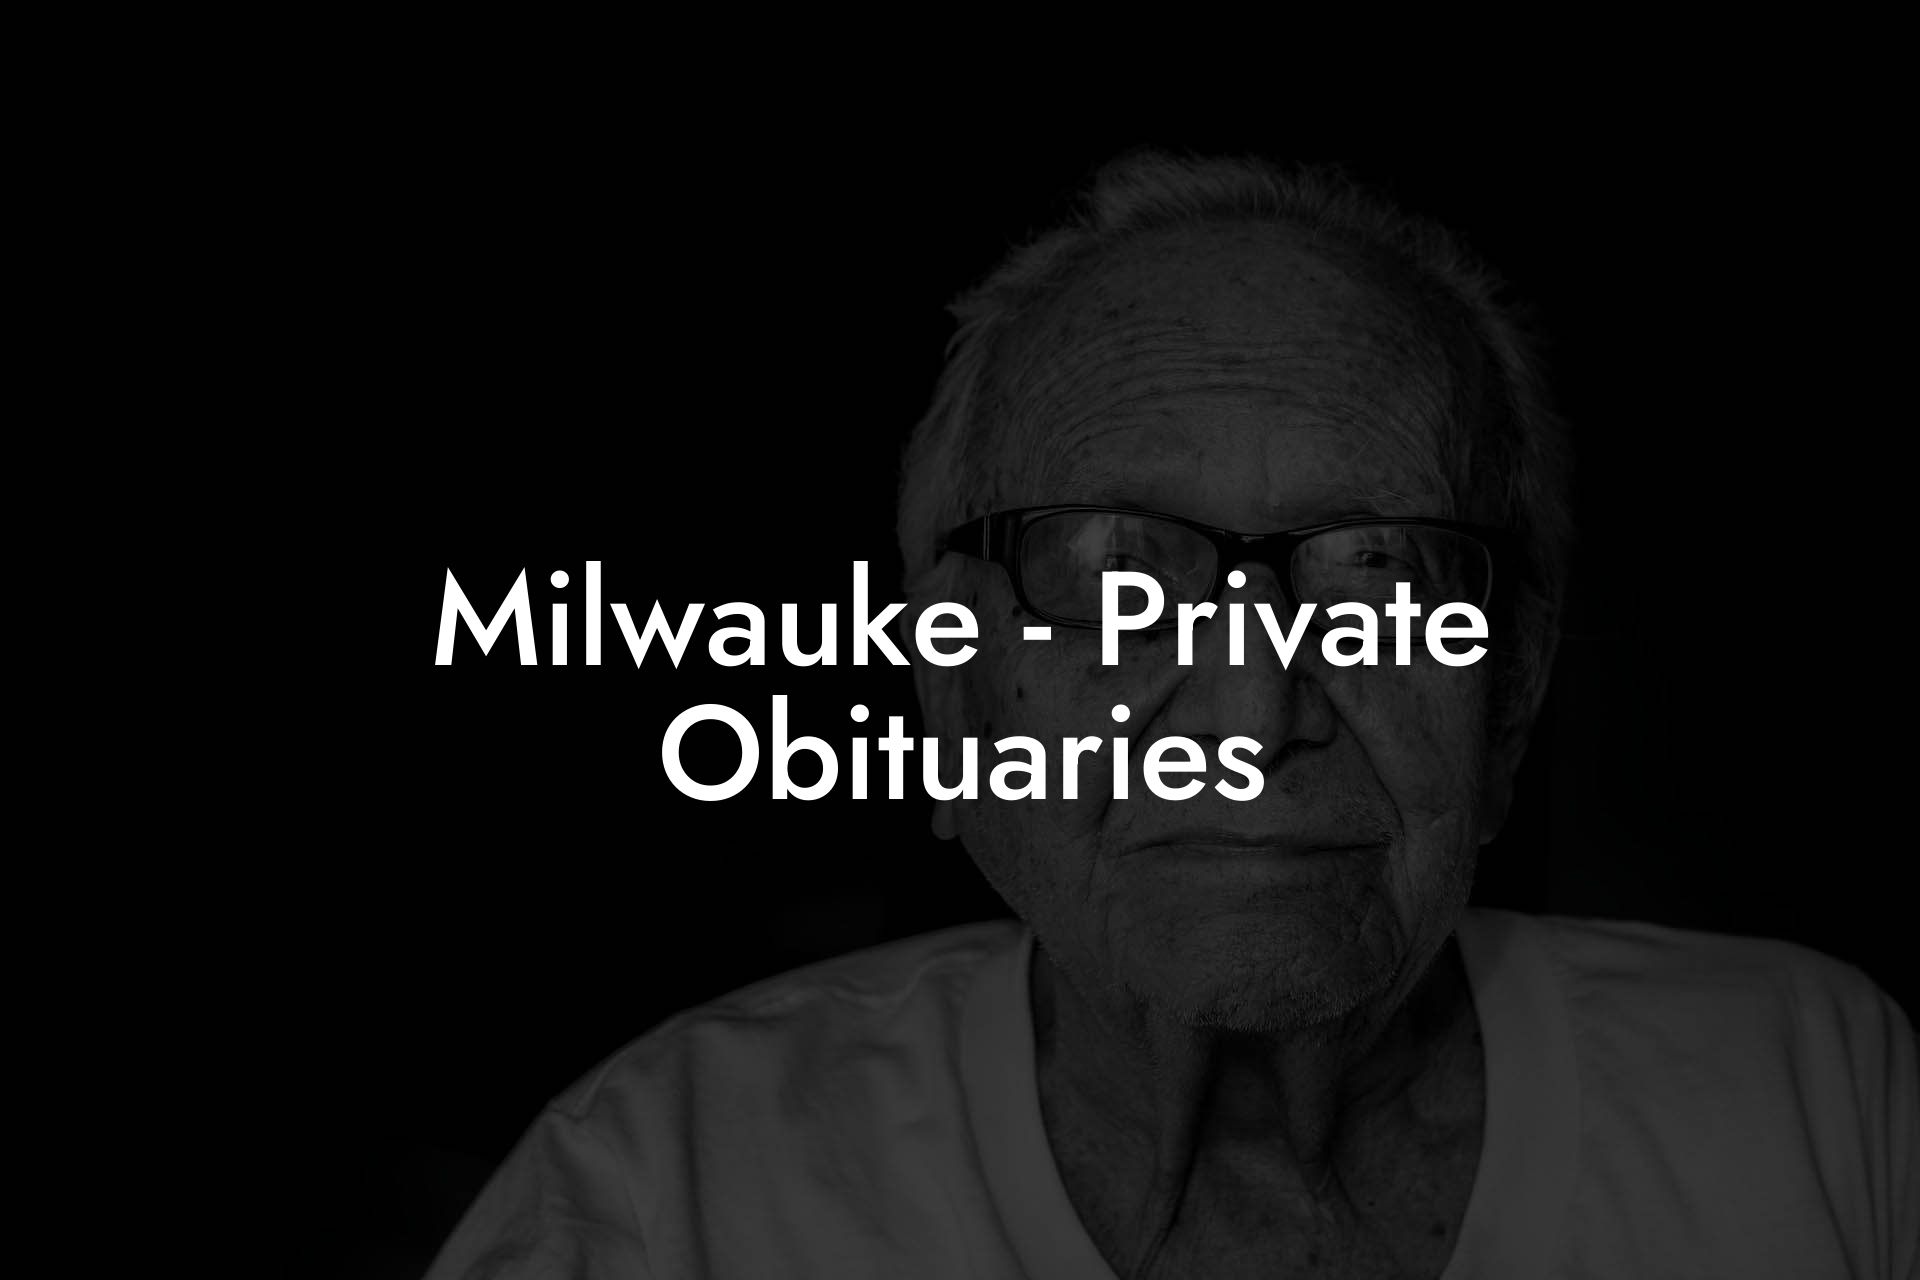 Milwauke - Private Obituaries